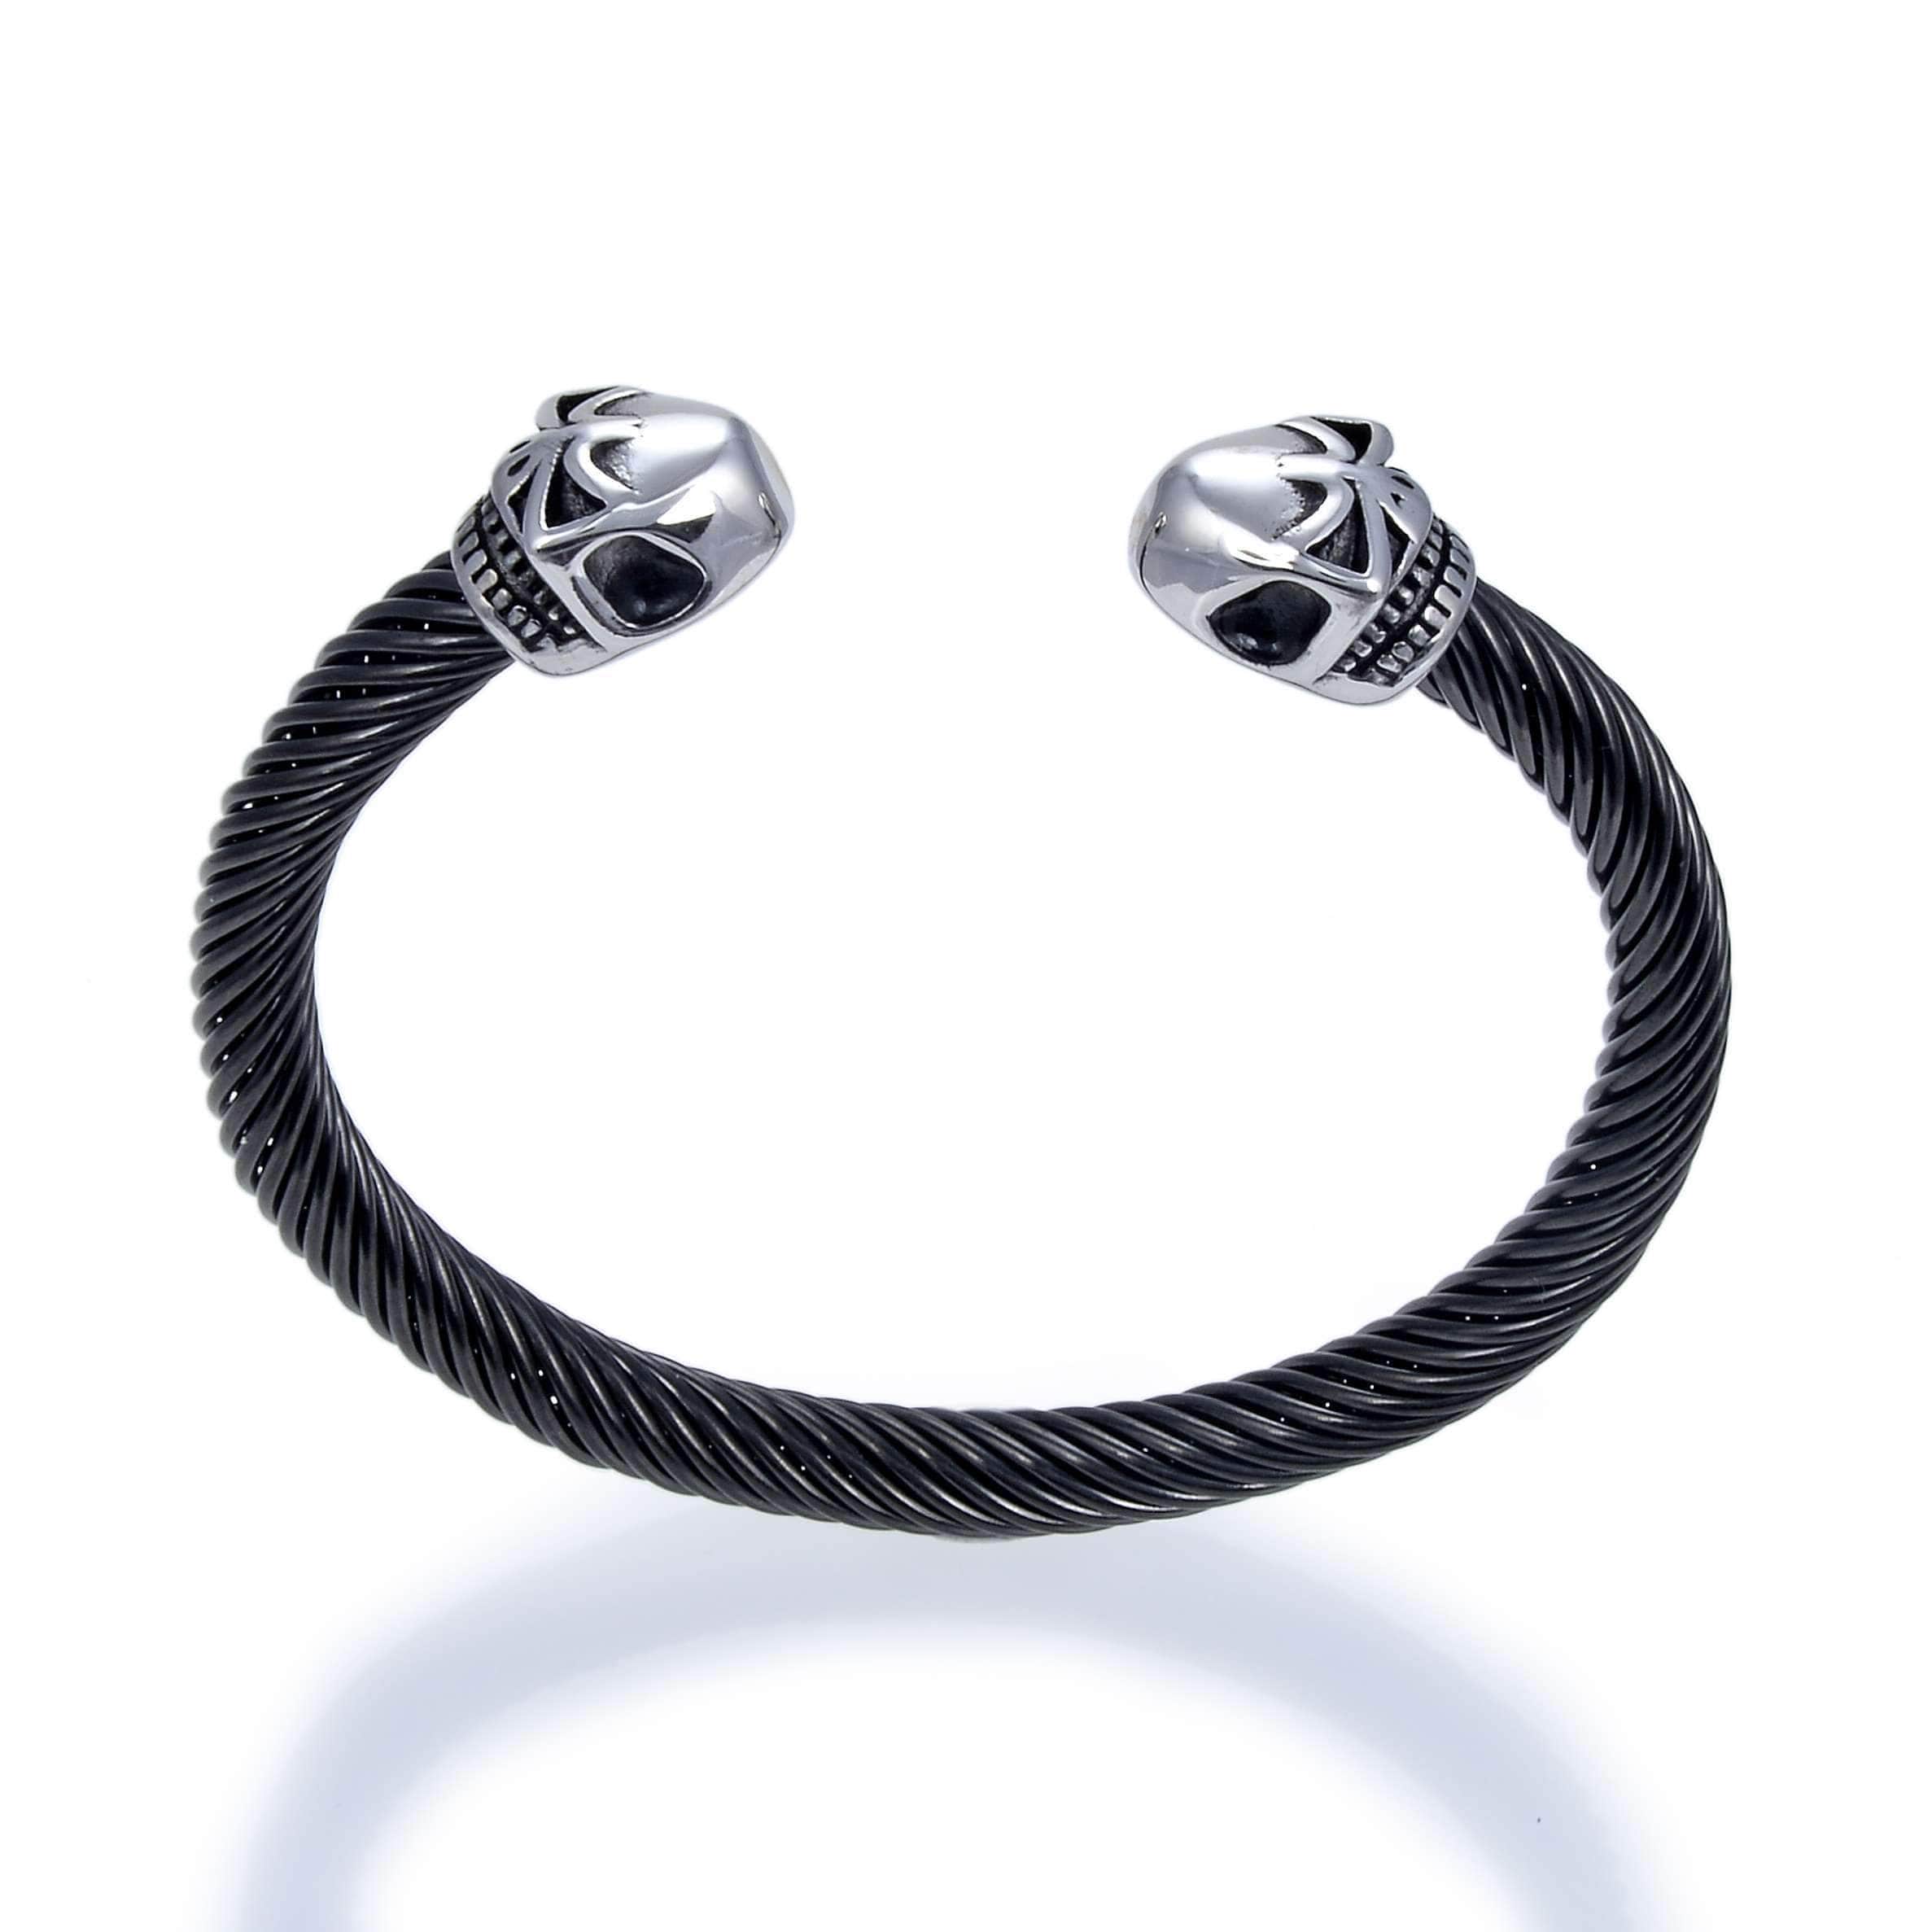 Kalifano Steel Hearts Jewelry Steel Hearts Black Rope Chain Pointed Skull Tip Open Bangle Bracelet SHB200-58